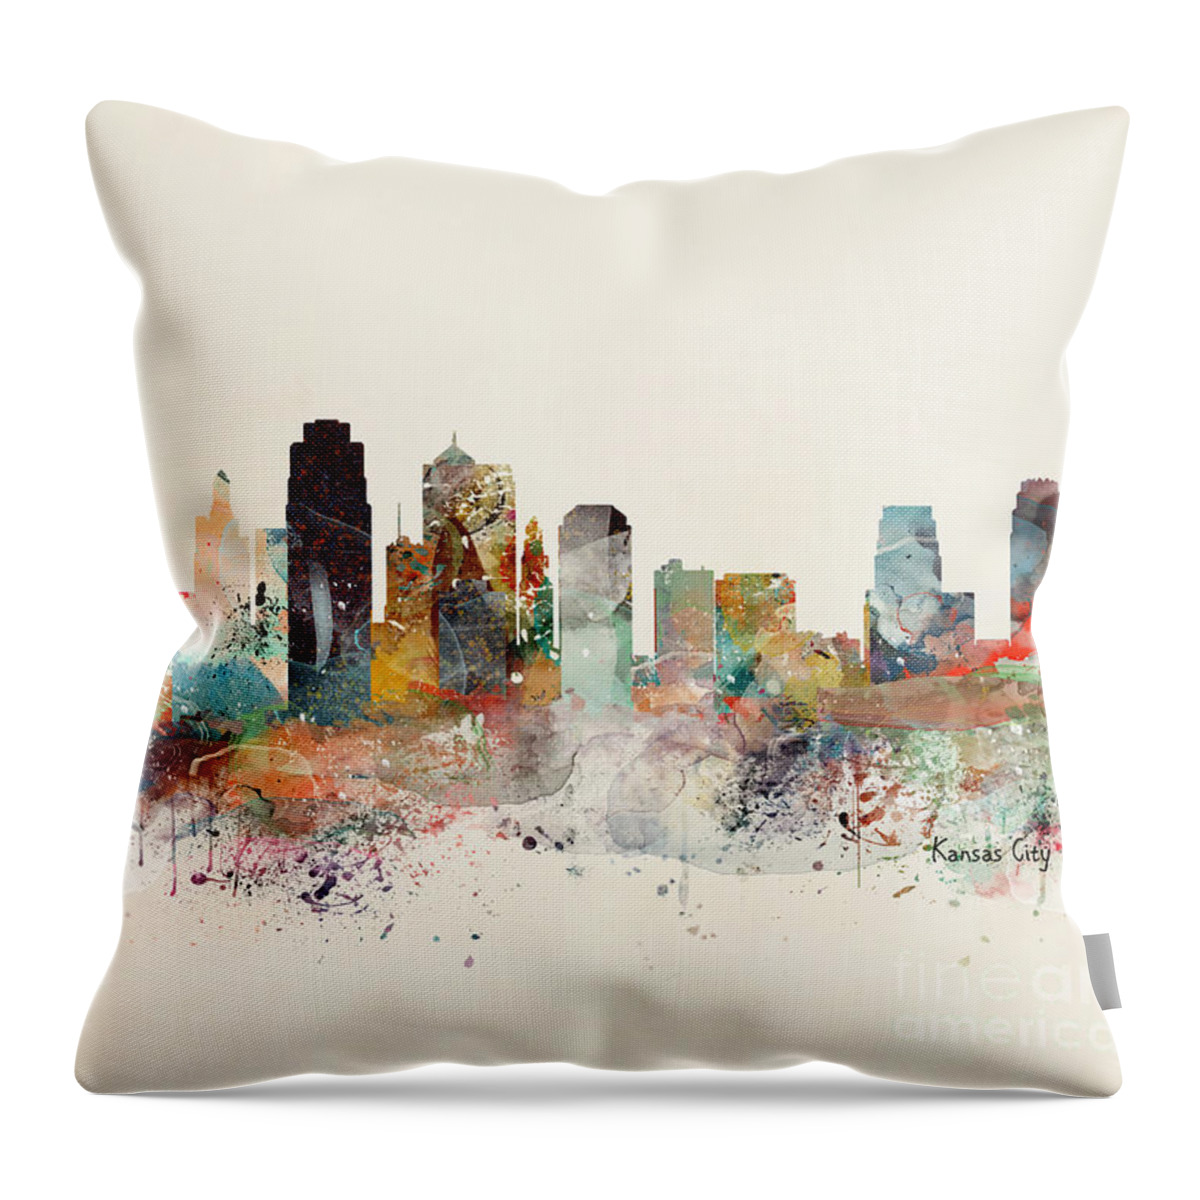 Kansas City Throw Pillow featuring the painting Kansas City Missouri by Bri Buckley